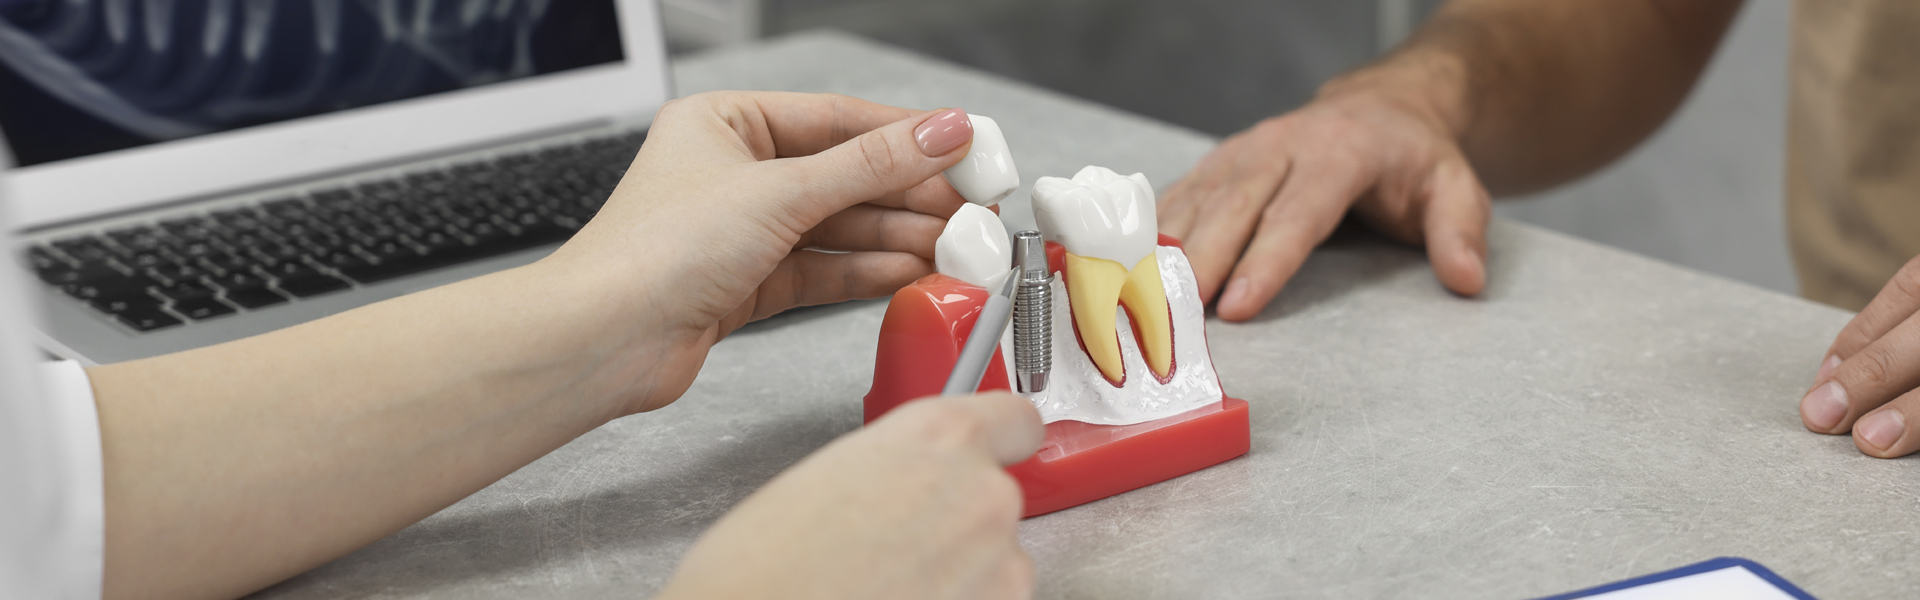 Dental Implants Vs. Bridges: Guide on Choosing the Right One